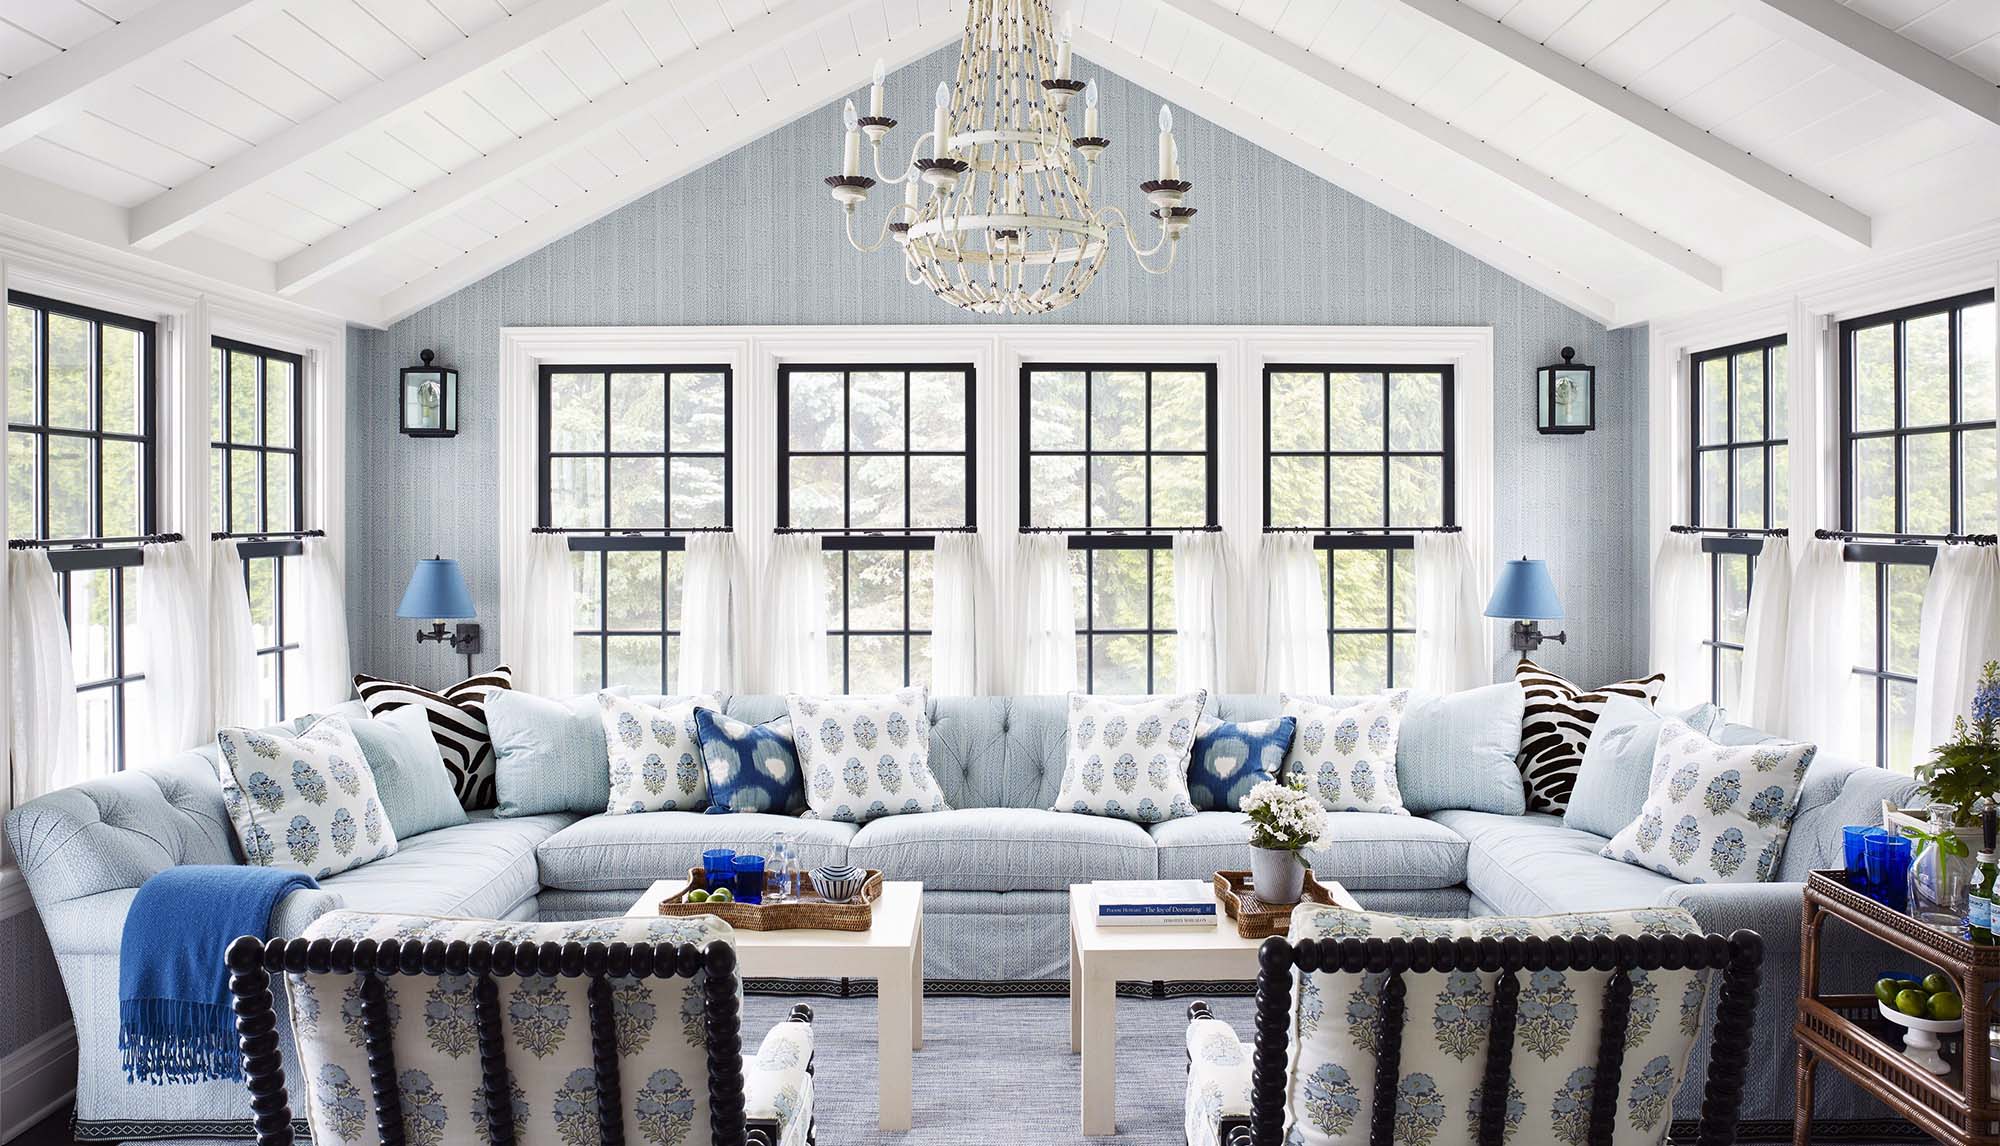 blue and white theme sunroom chandelier cathedral ceilings beadboard exposed beams nj custom sunroom builder